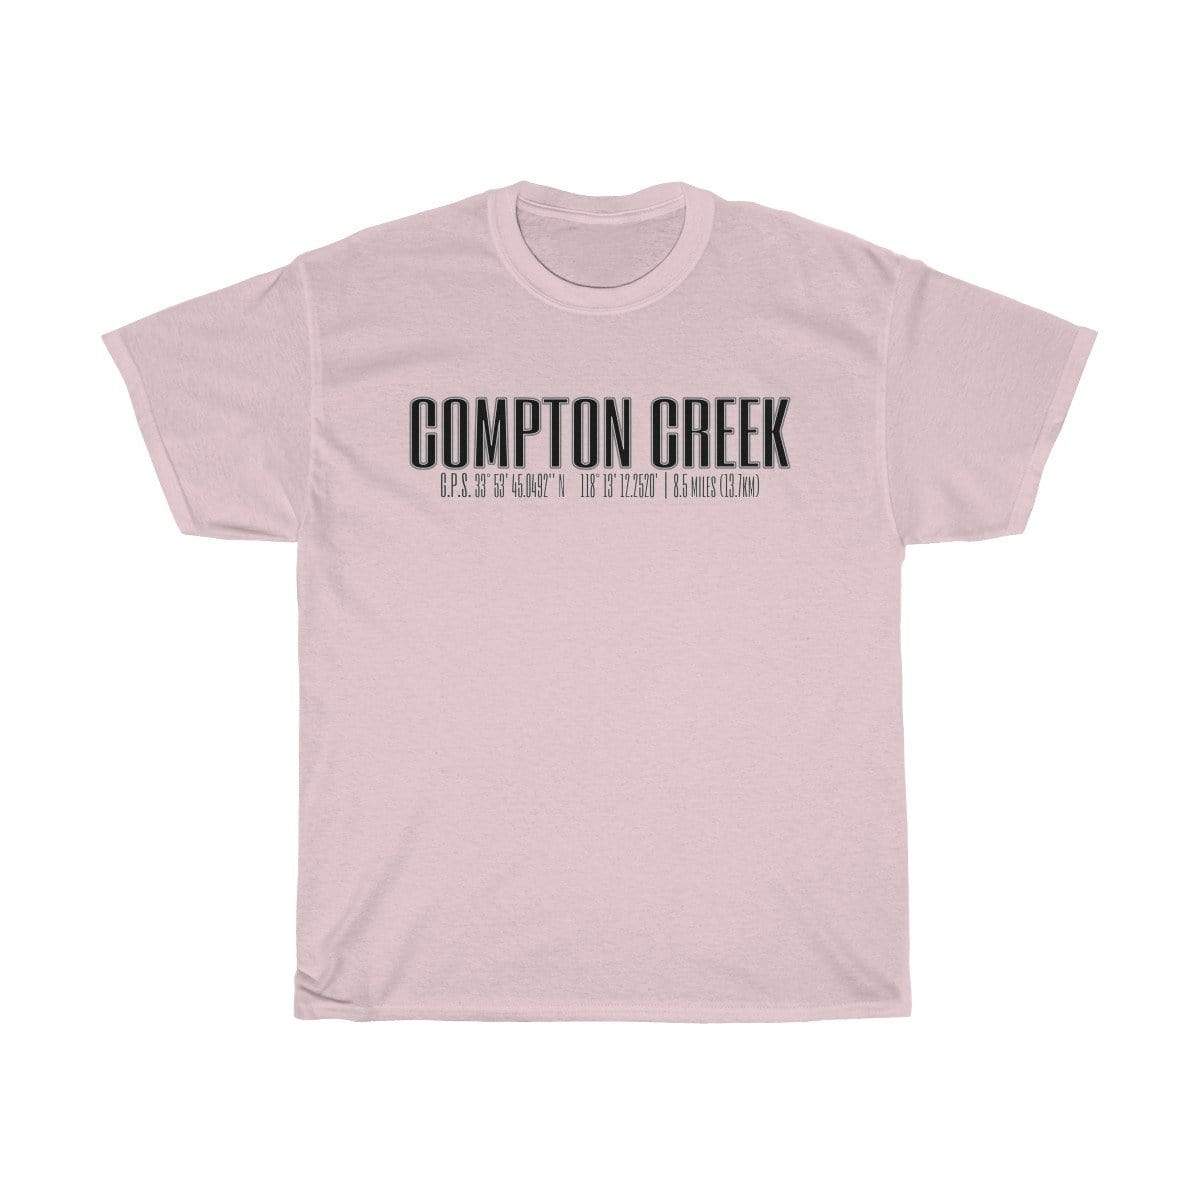 Plumskum T-Shirt Light Pink / S The Compton Creek GPS T-Shirt